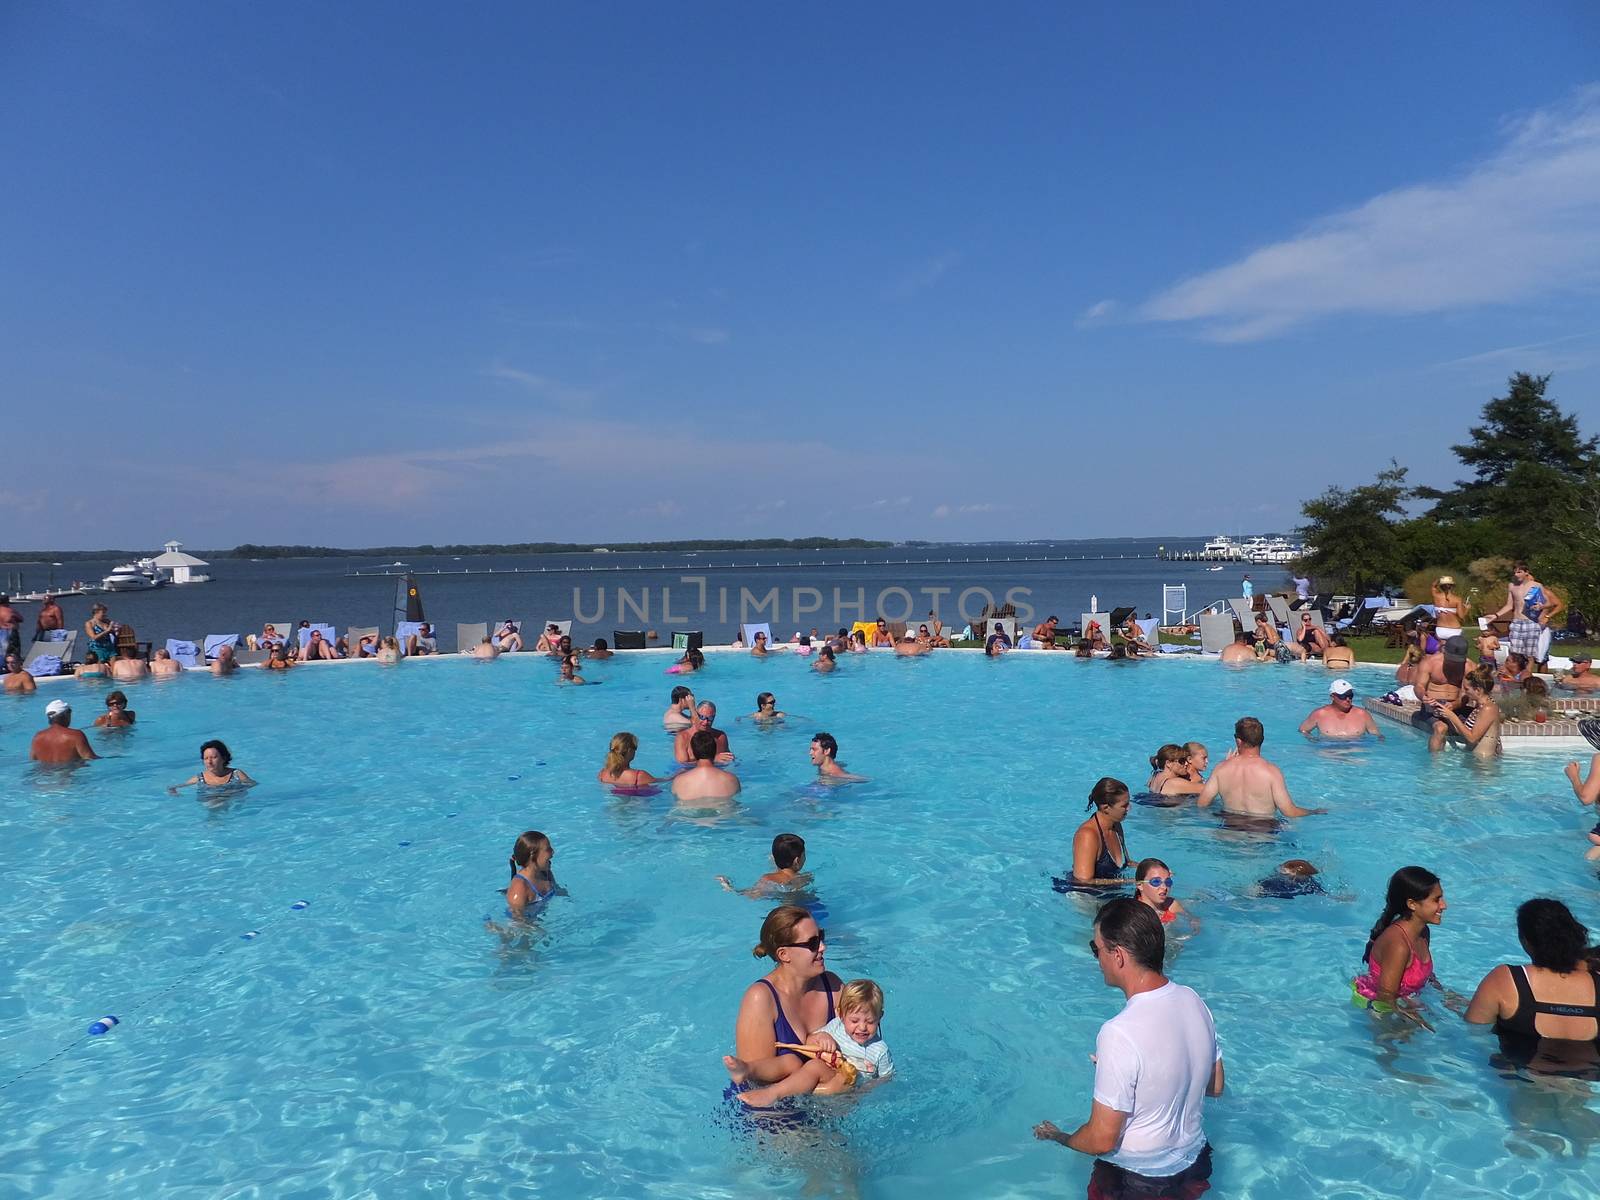 Poolside fun at the Hyatt Regency Chesapeake Bay resort in Cambridge, Maryland by sainaniritu